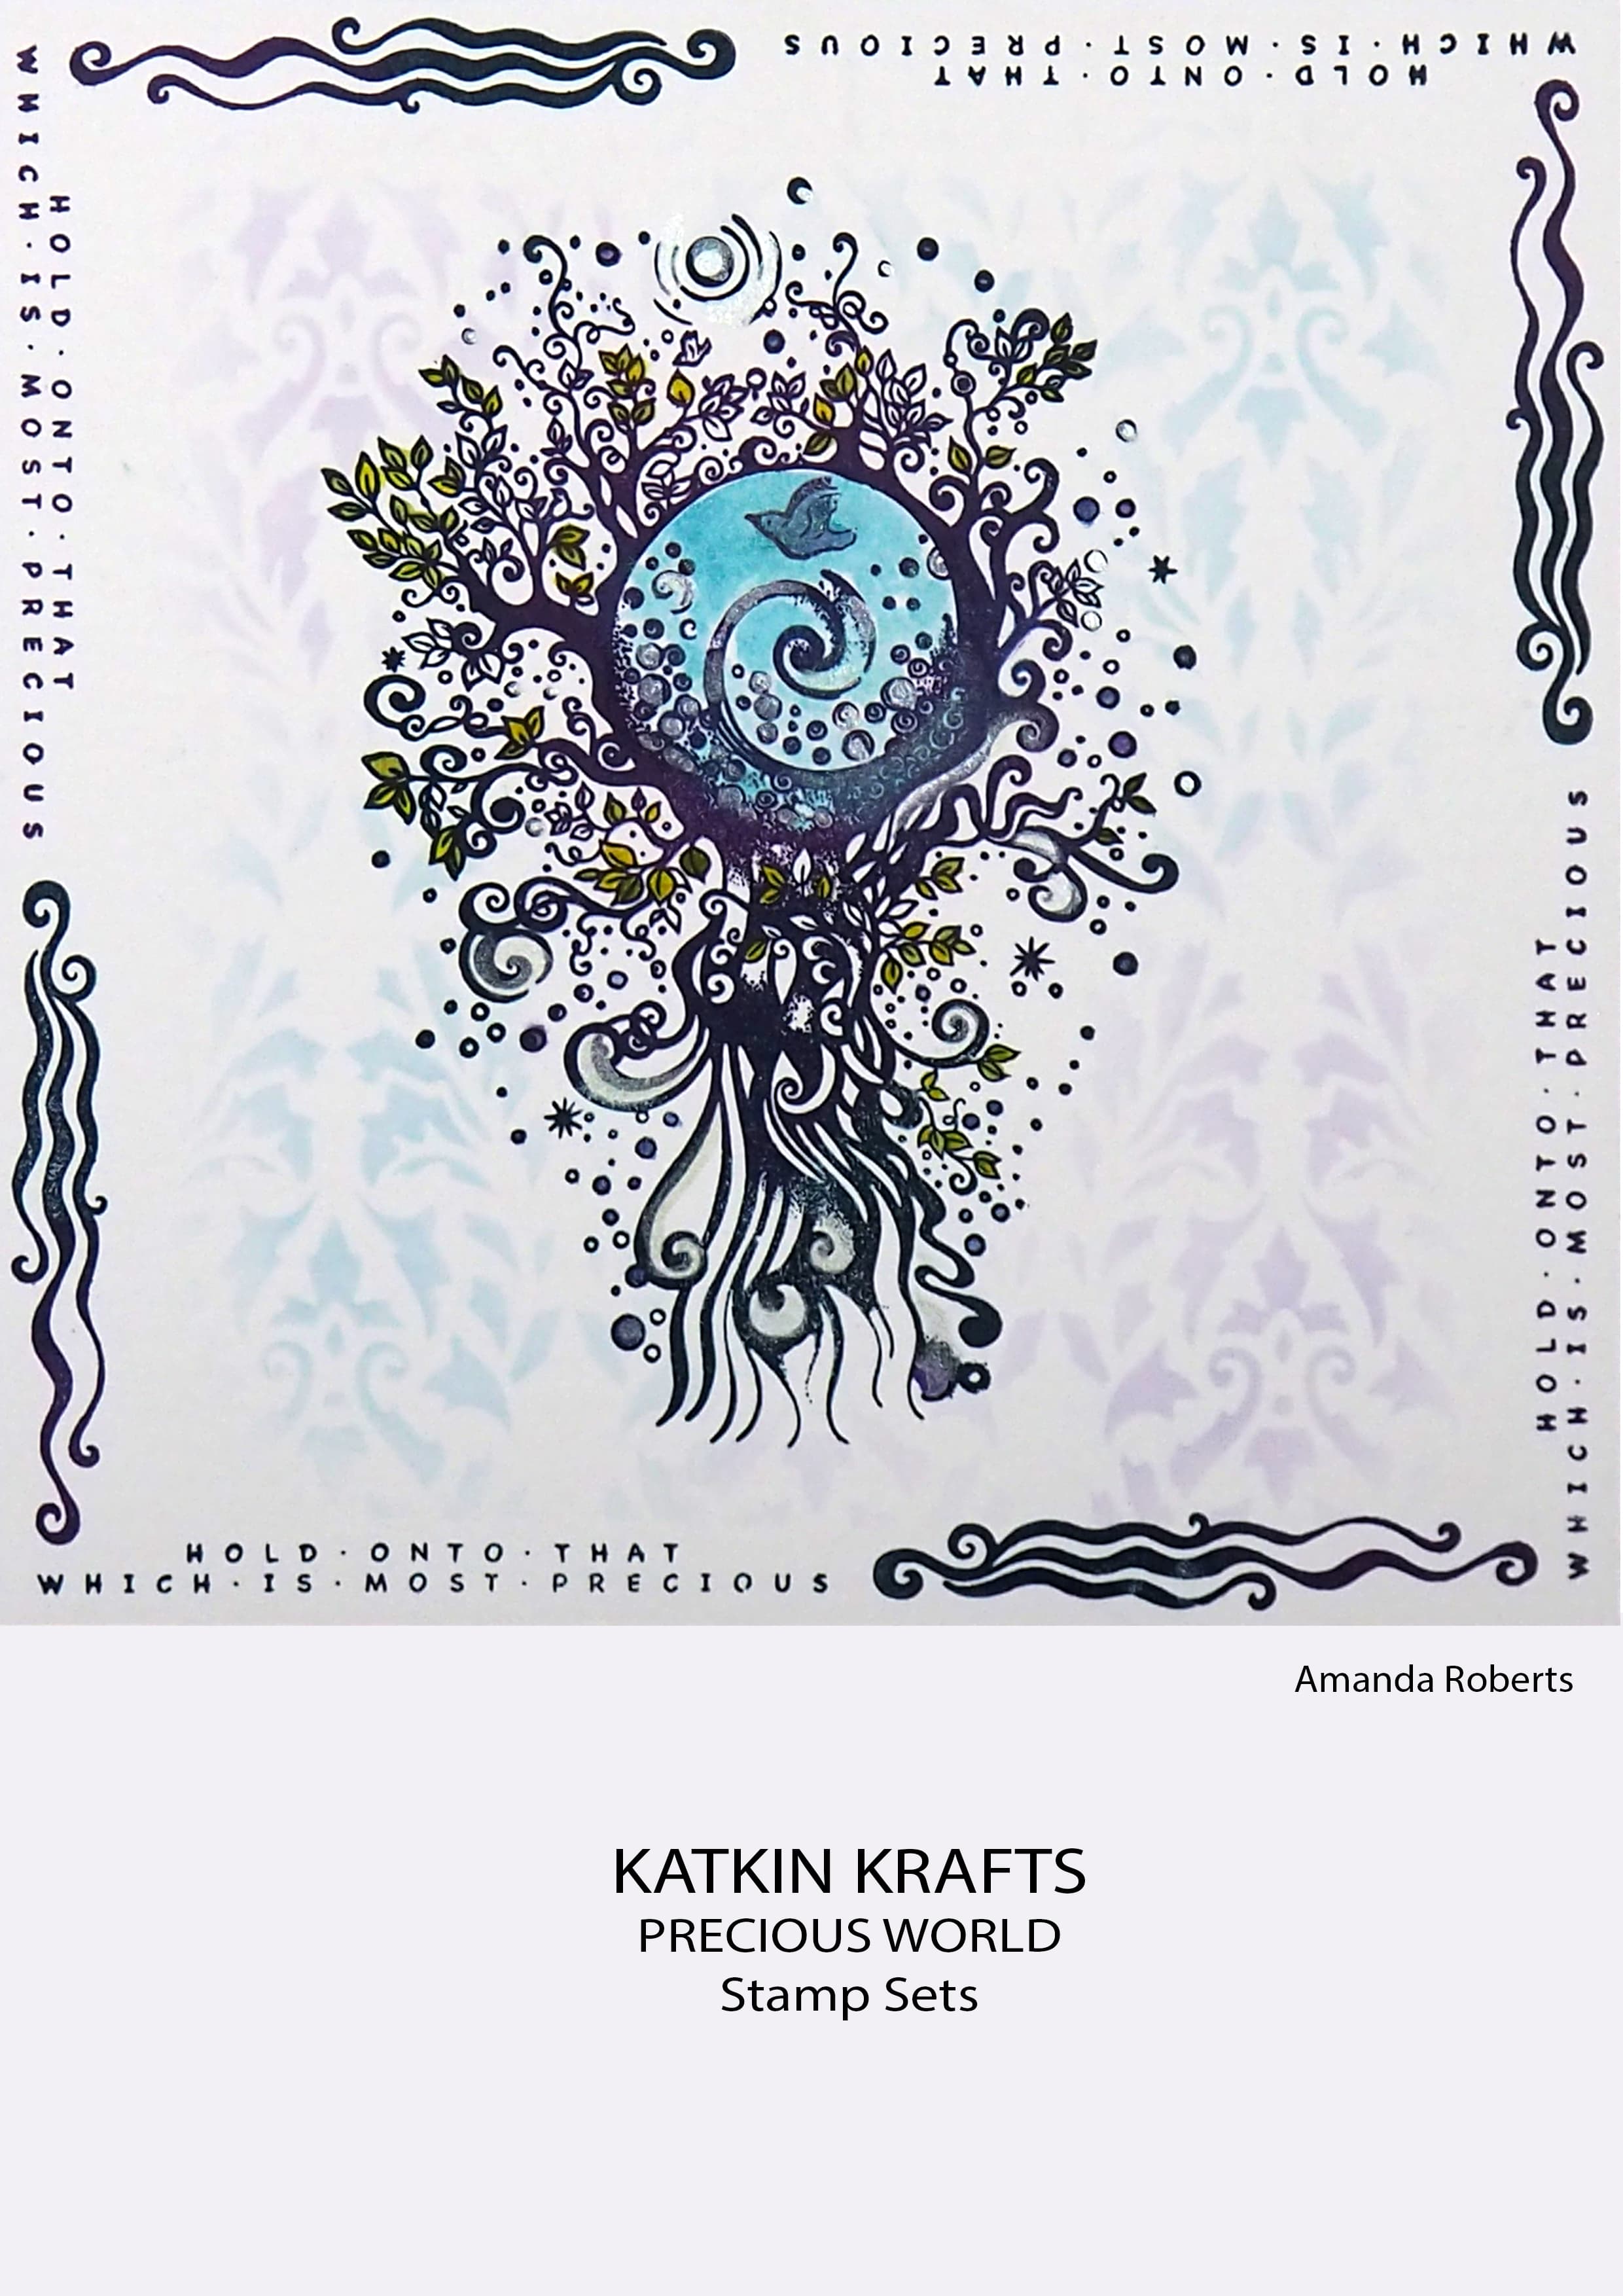 Katkin Krafts Precious World 6 in x 8 in Clear Stamp Set